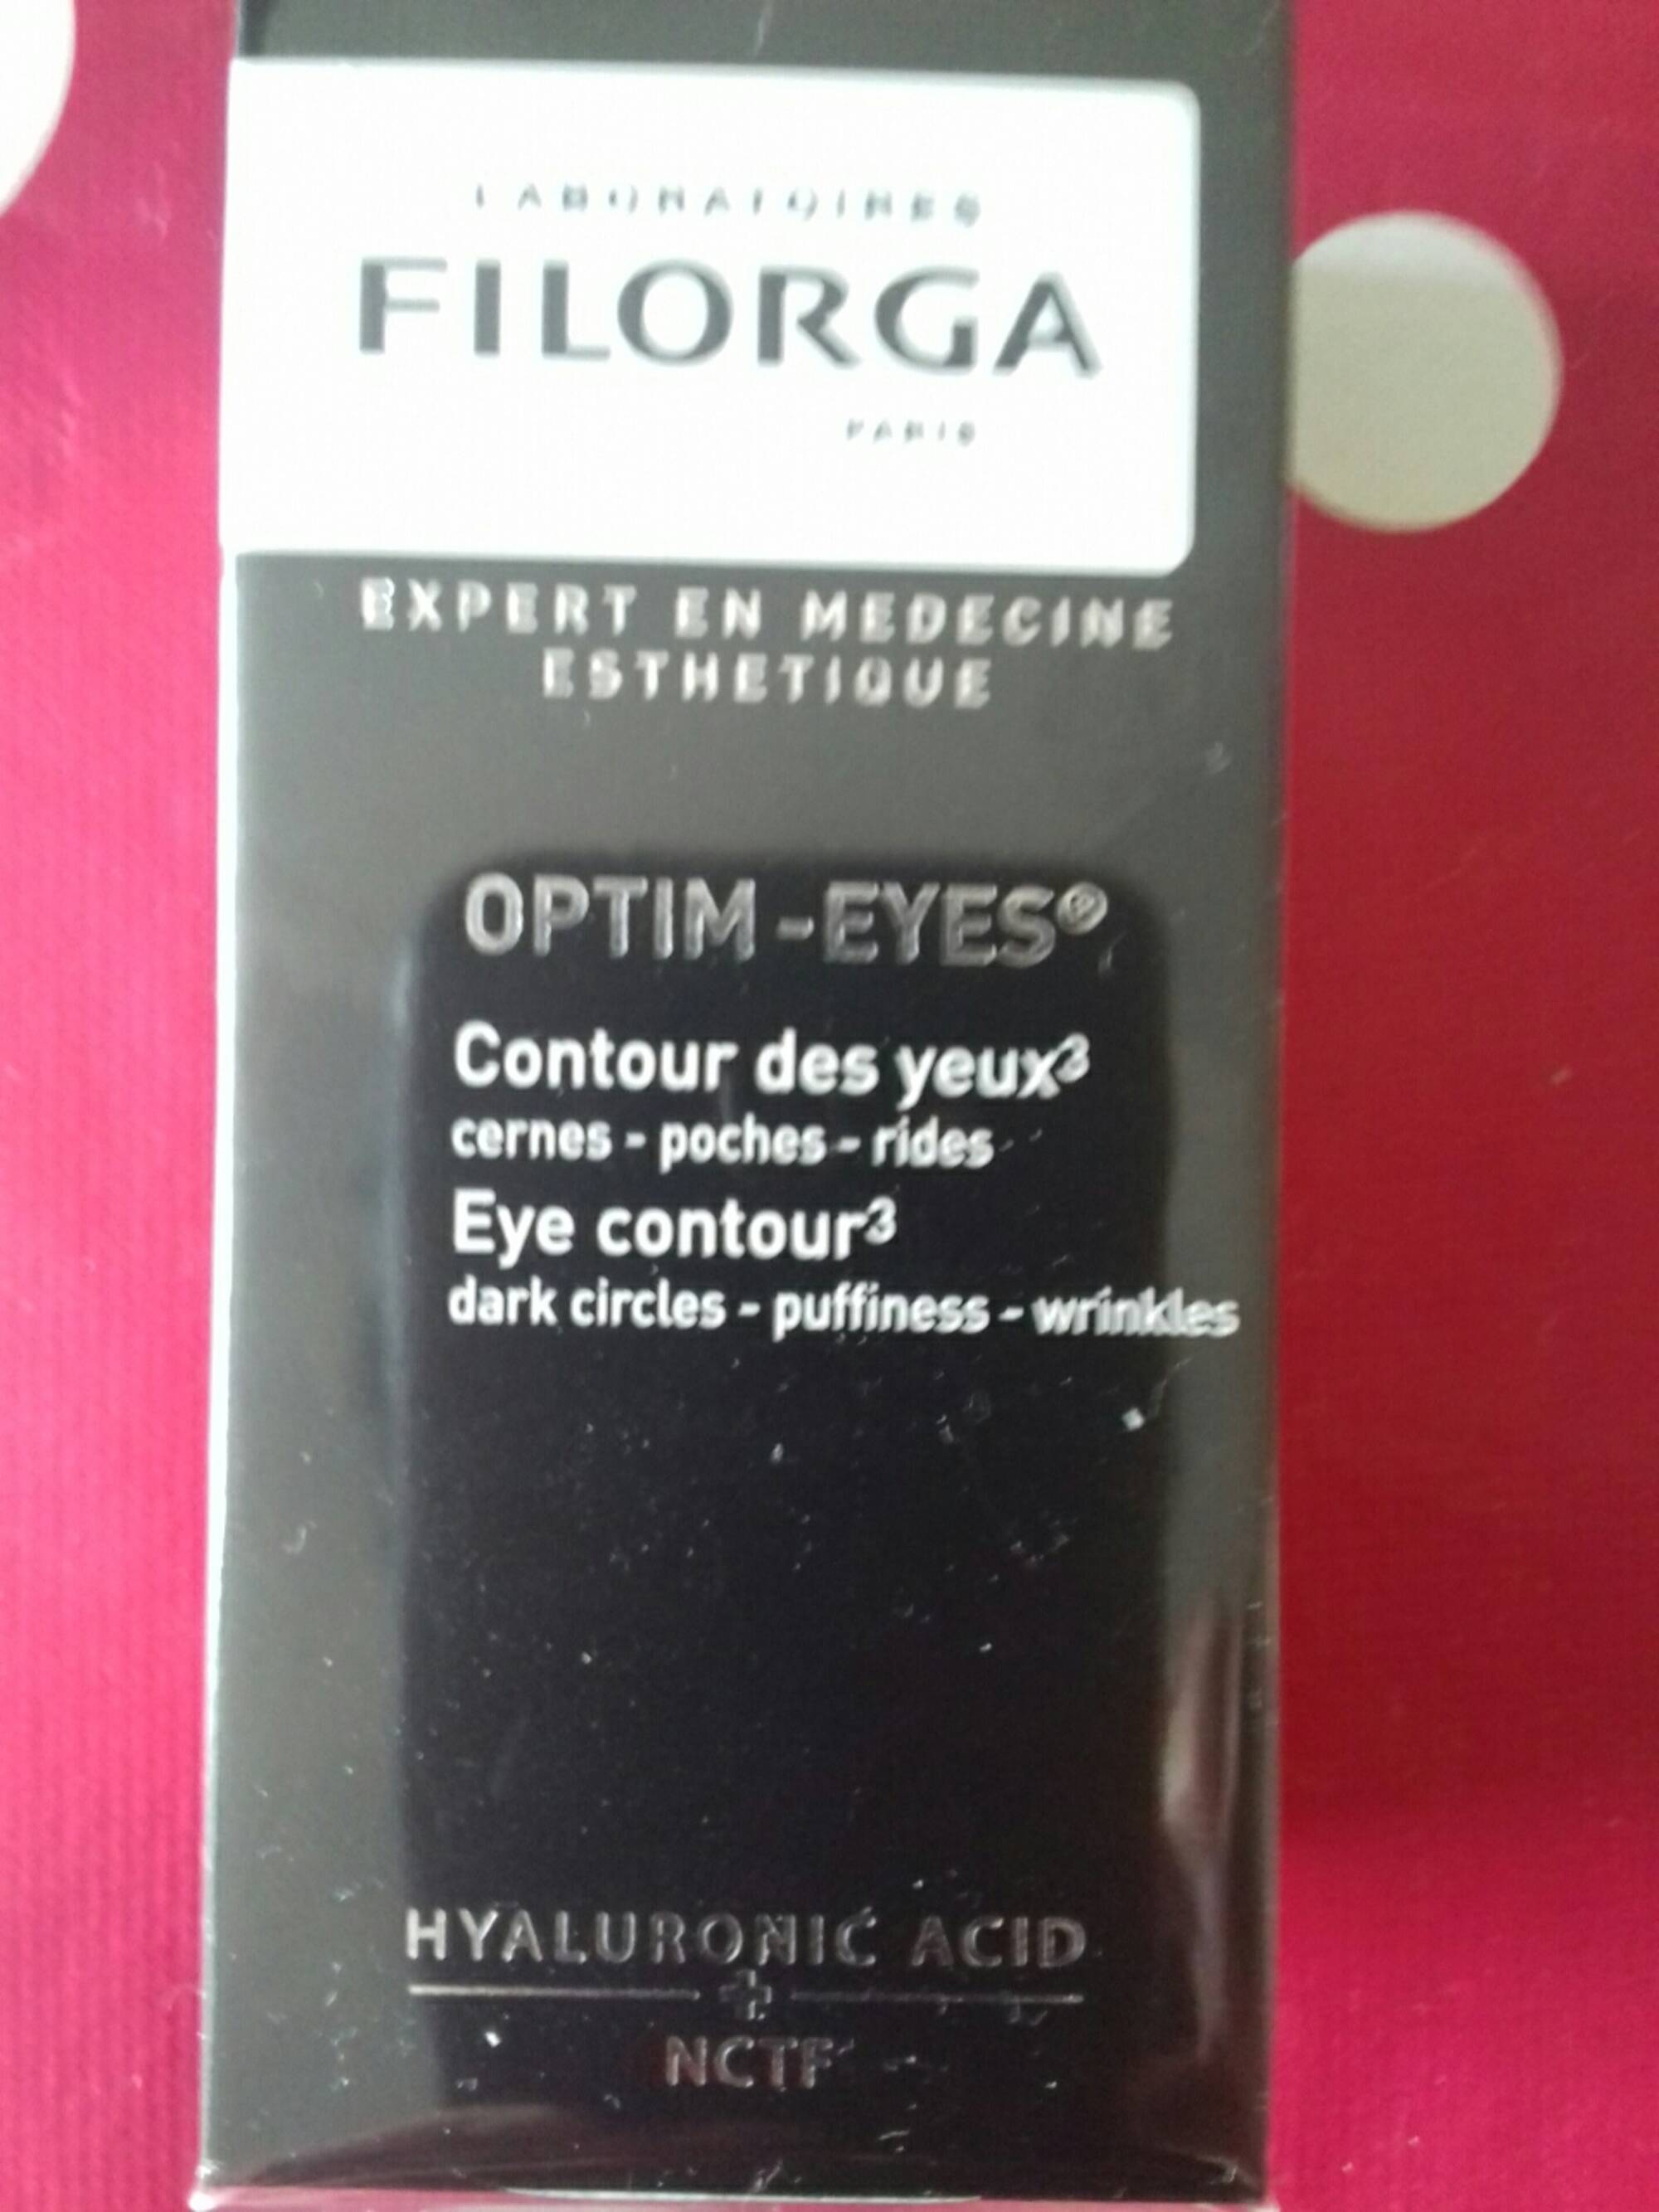 FILORGA - Optim-eyes - Contour des yeux